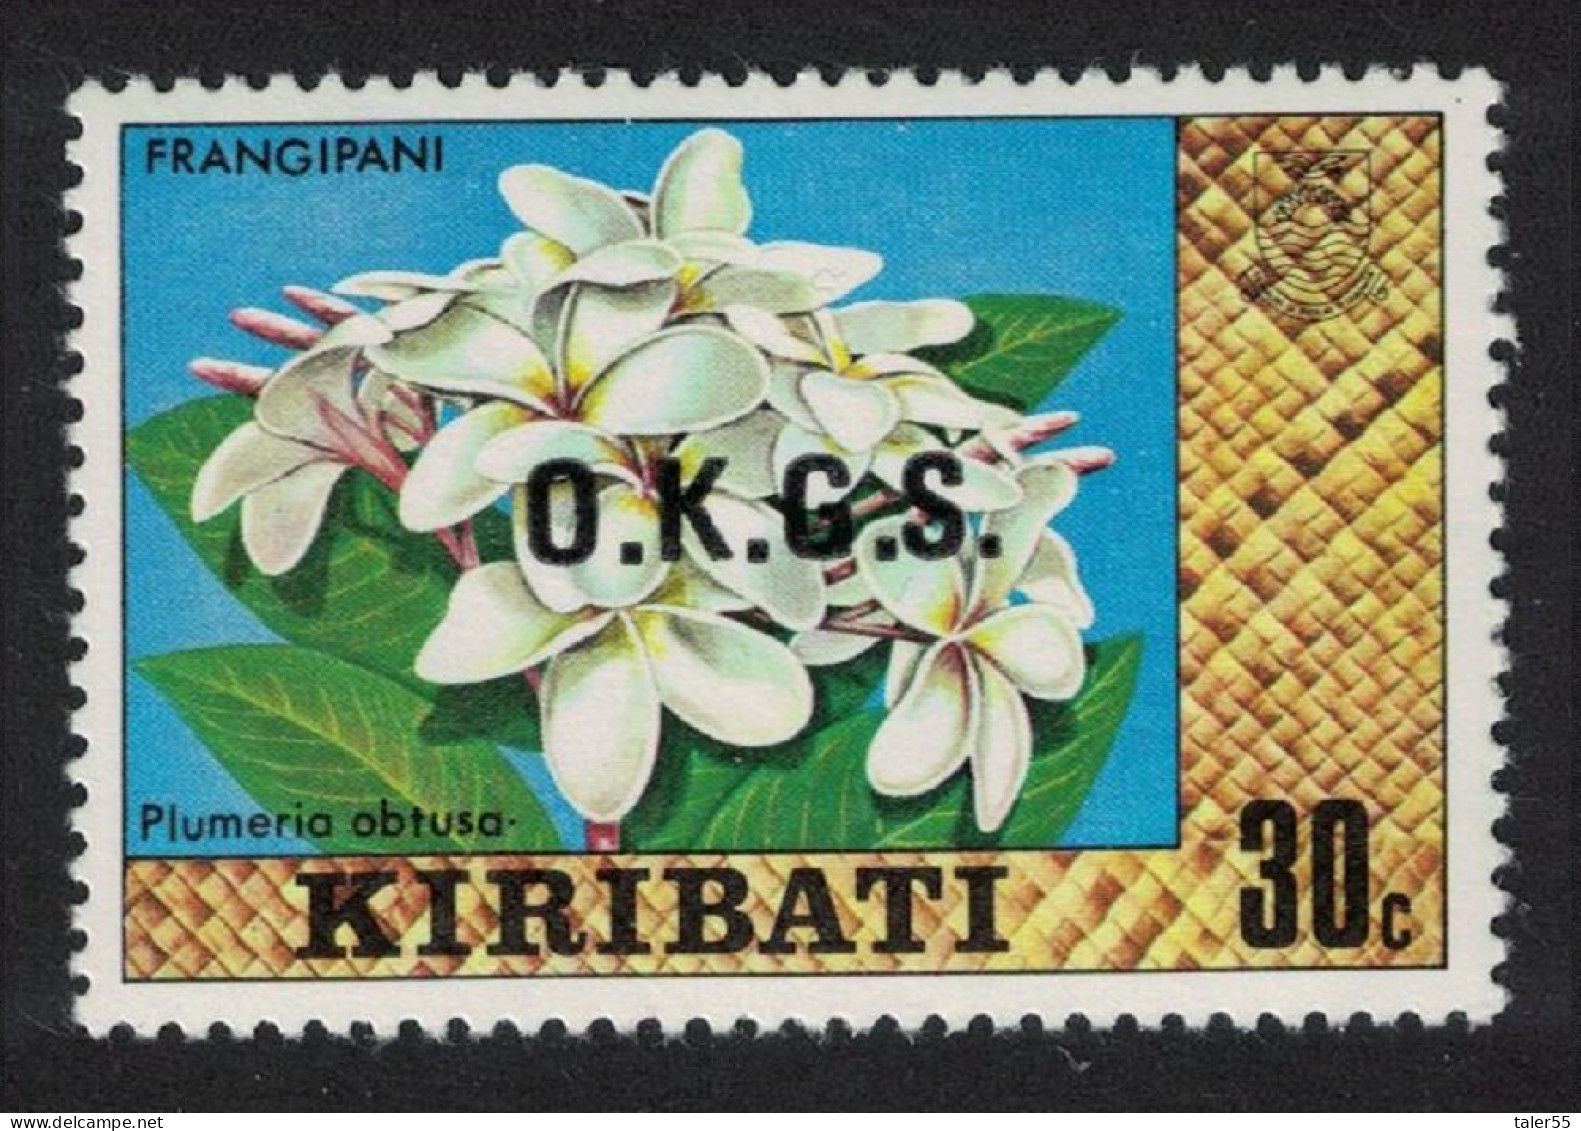 Kiribati Frangipani Flower 30c Overprint 'O.K.G.S.' 1980 MNH SG#O20 - Kiribati (1979-...)